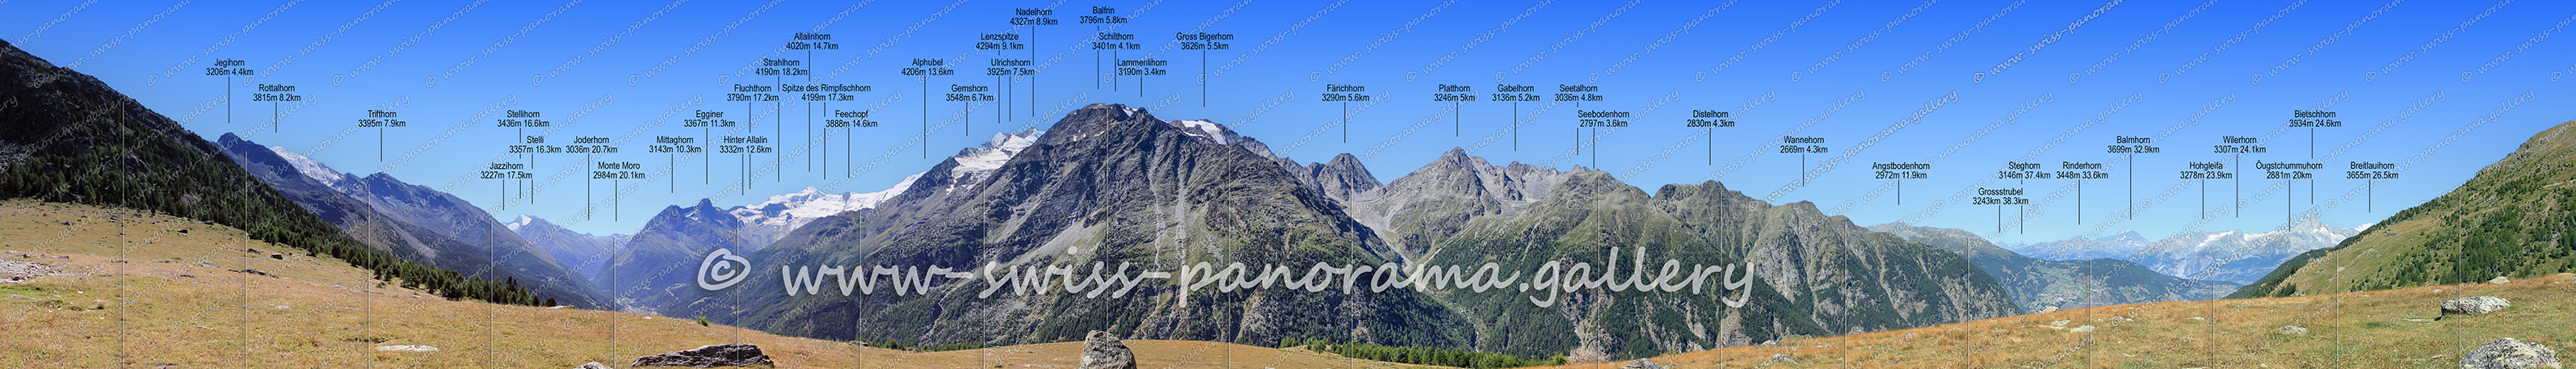 Panorama Saastal Gsponer Höhenweg Walliser Alpenpanorama swiss-panorama.gallery